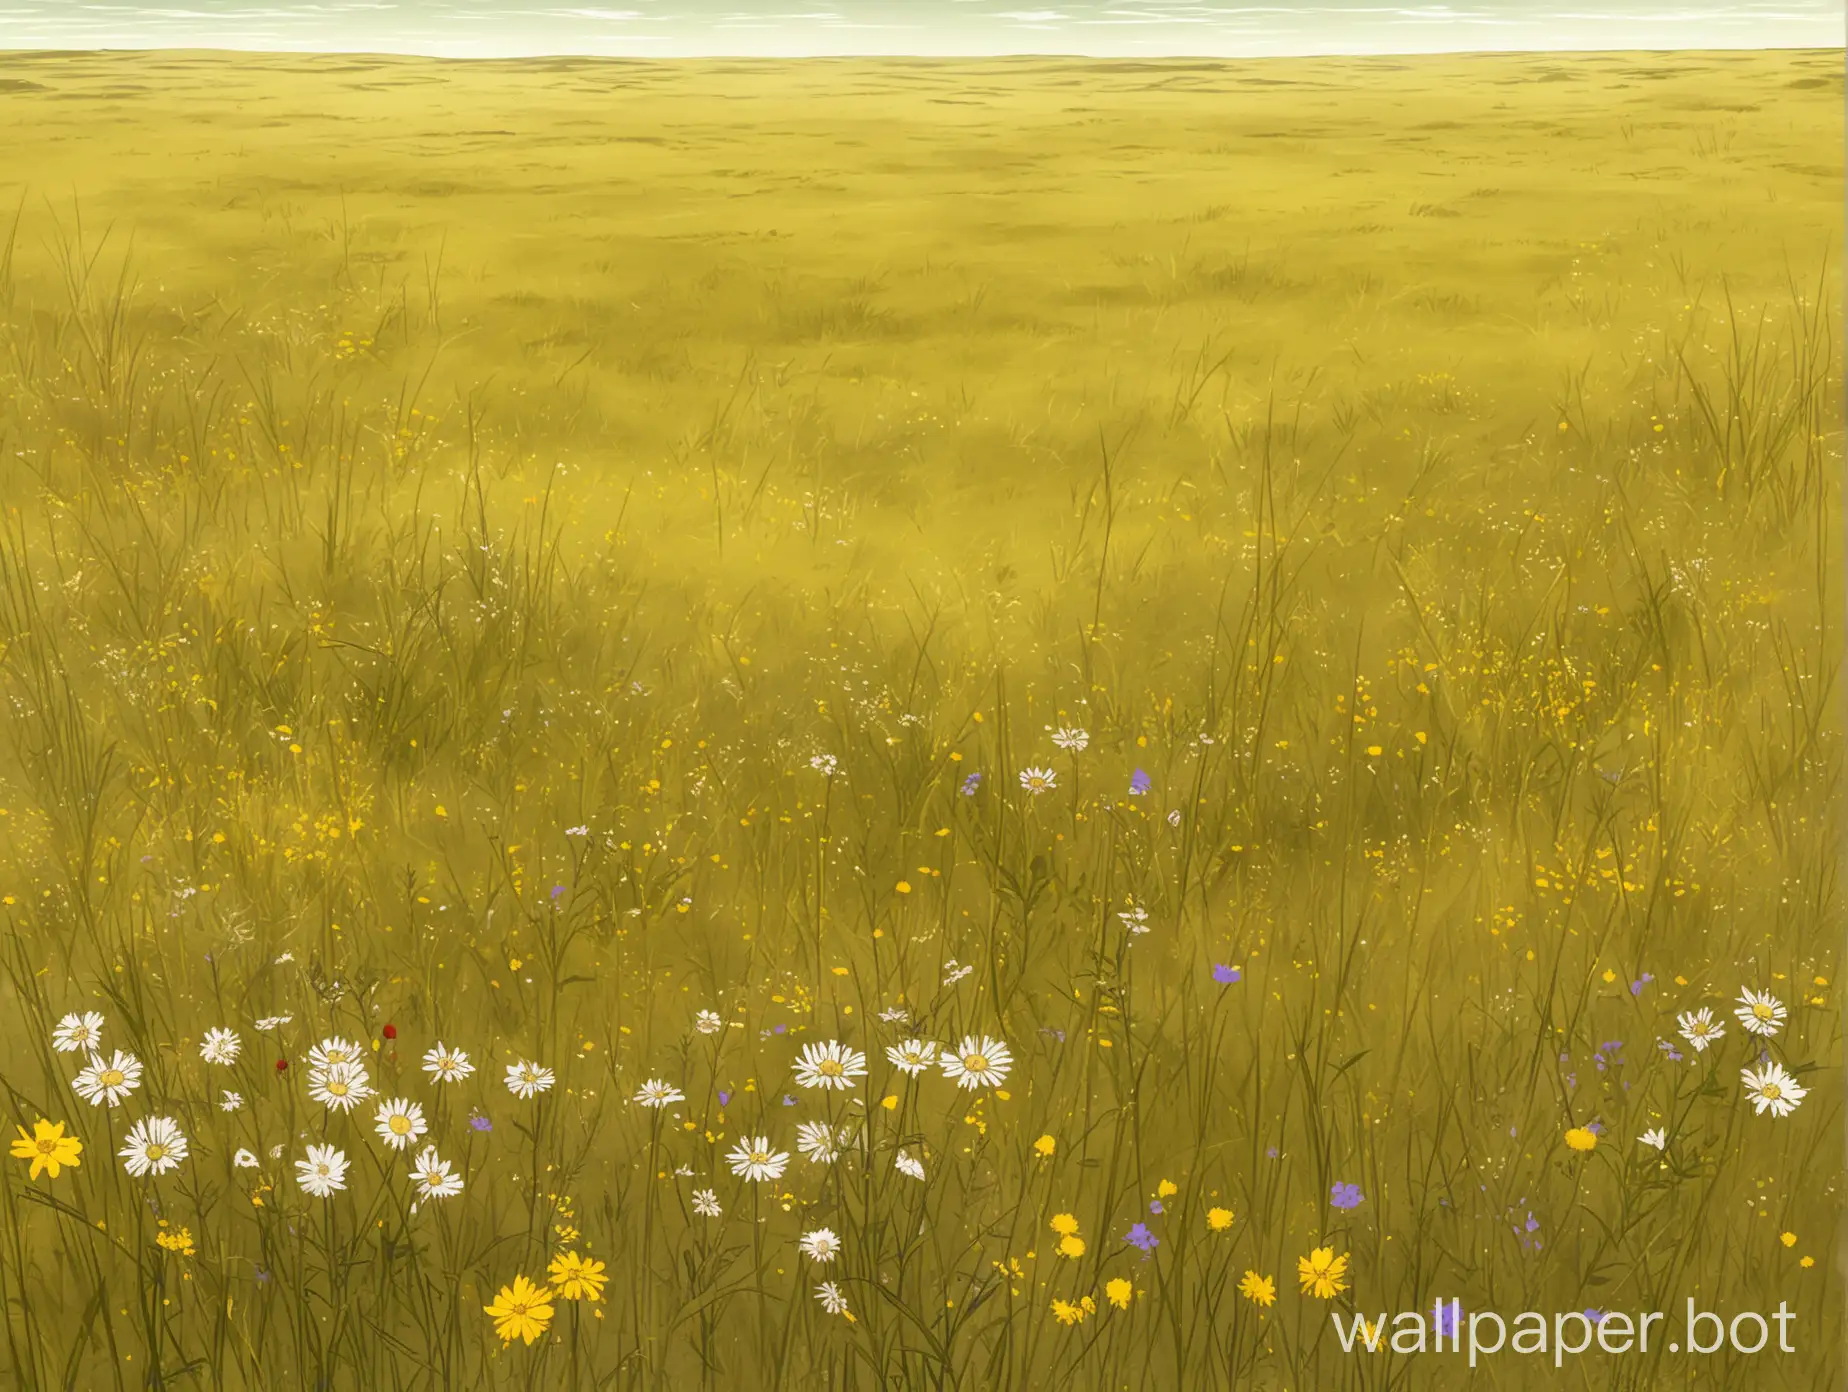 Scenic-Vinland-Saga-Landscape-with-Wildflowers-on-Grassy-Fields